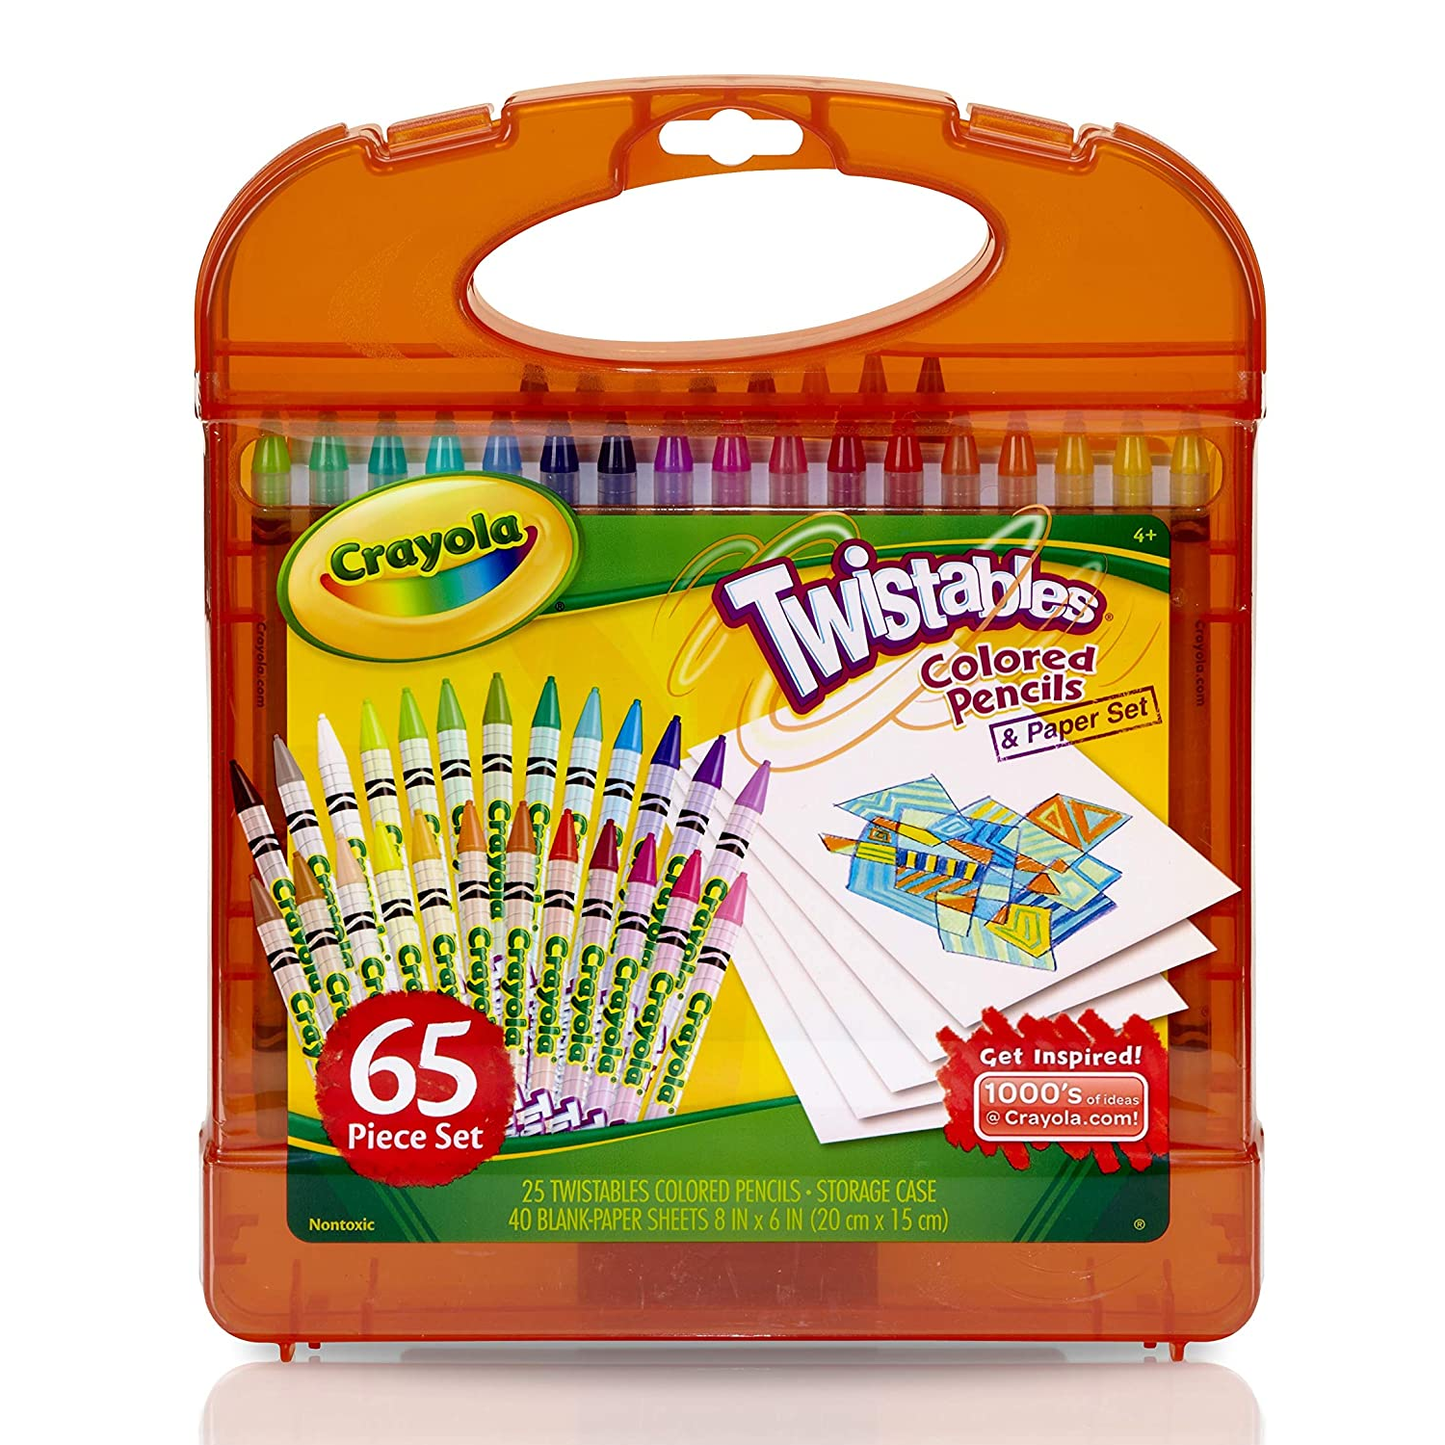 Crayola Twistable Colored Pencils Kit